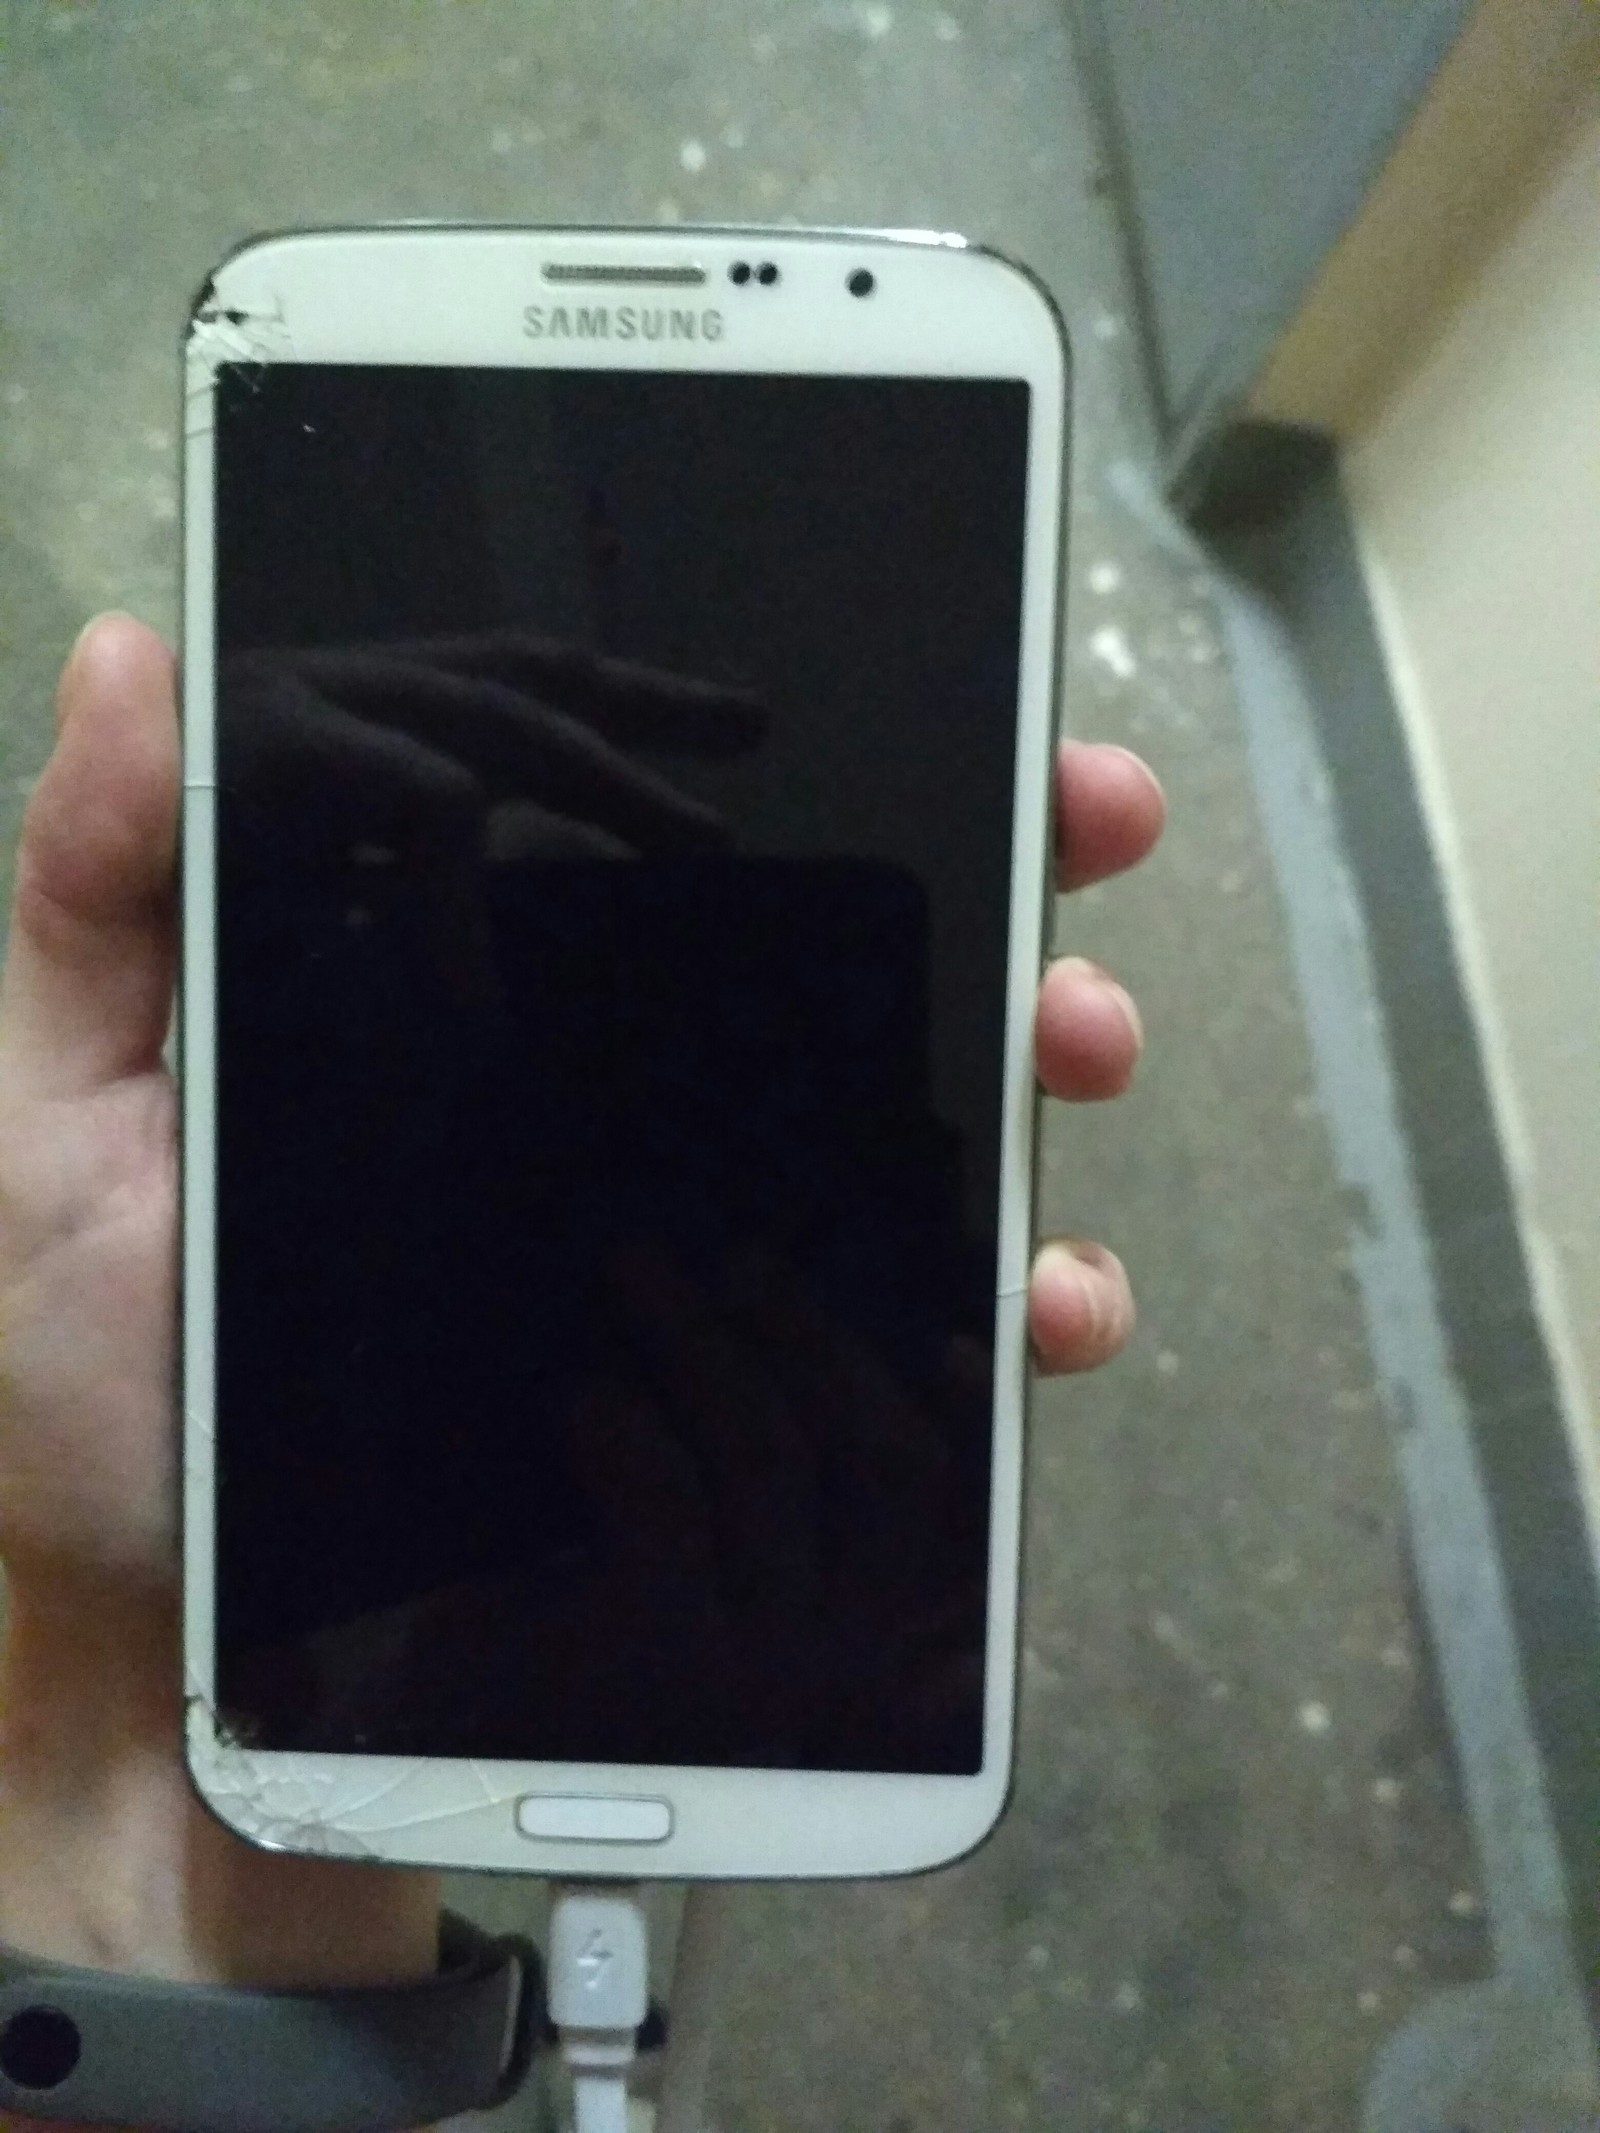 Samsung galaxy mega gt-19200 - Samsung, Samsung Galaxy